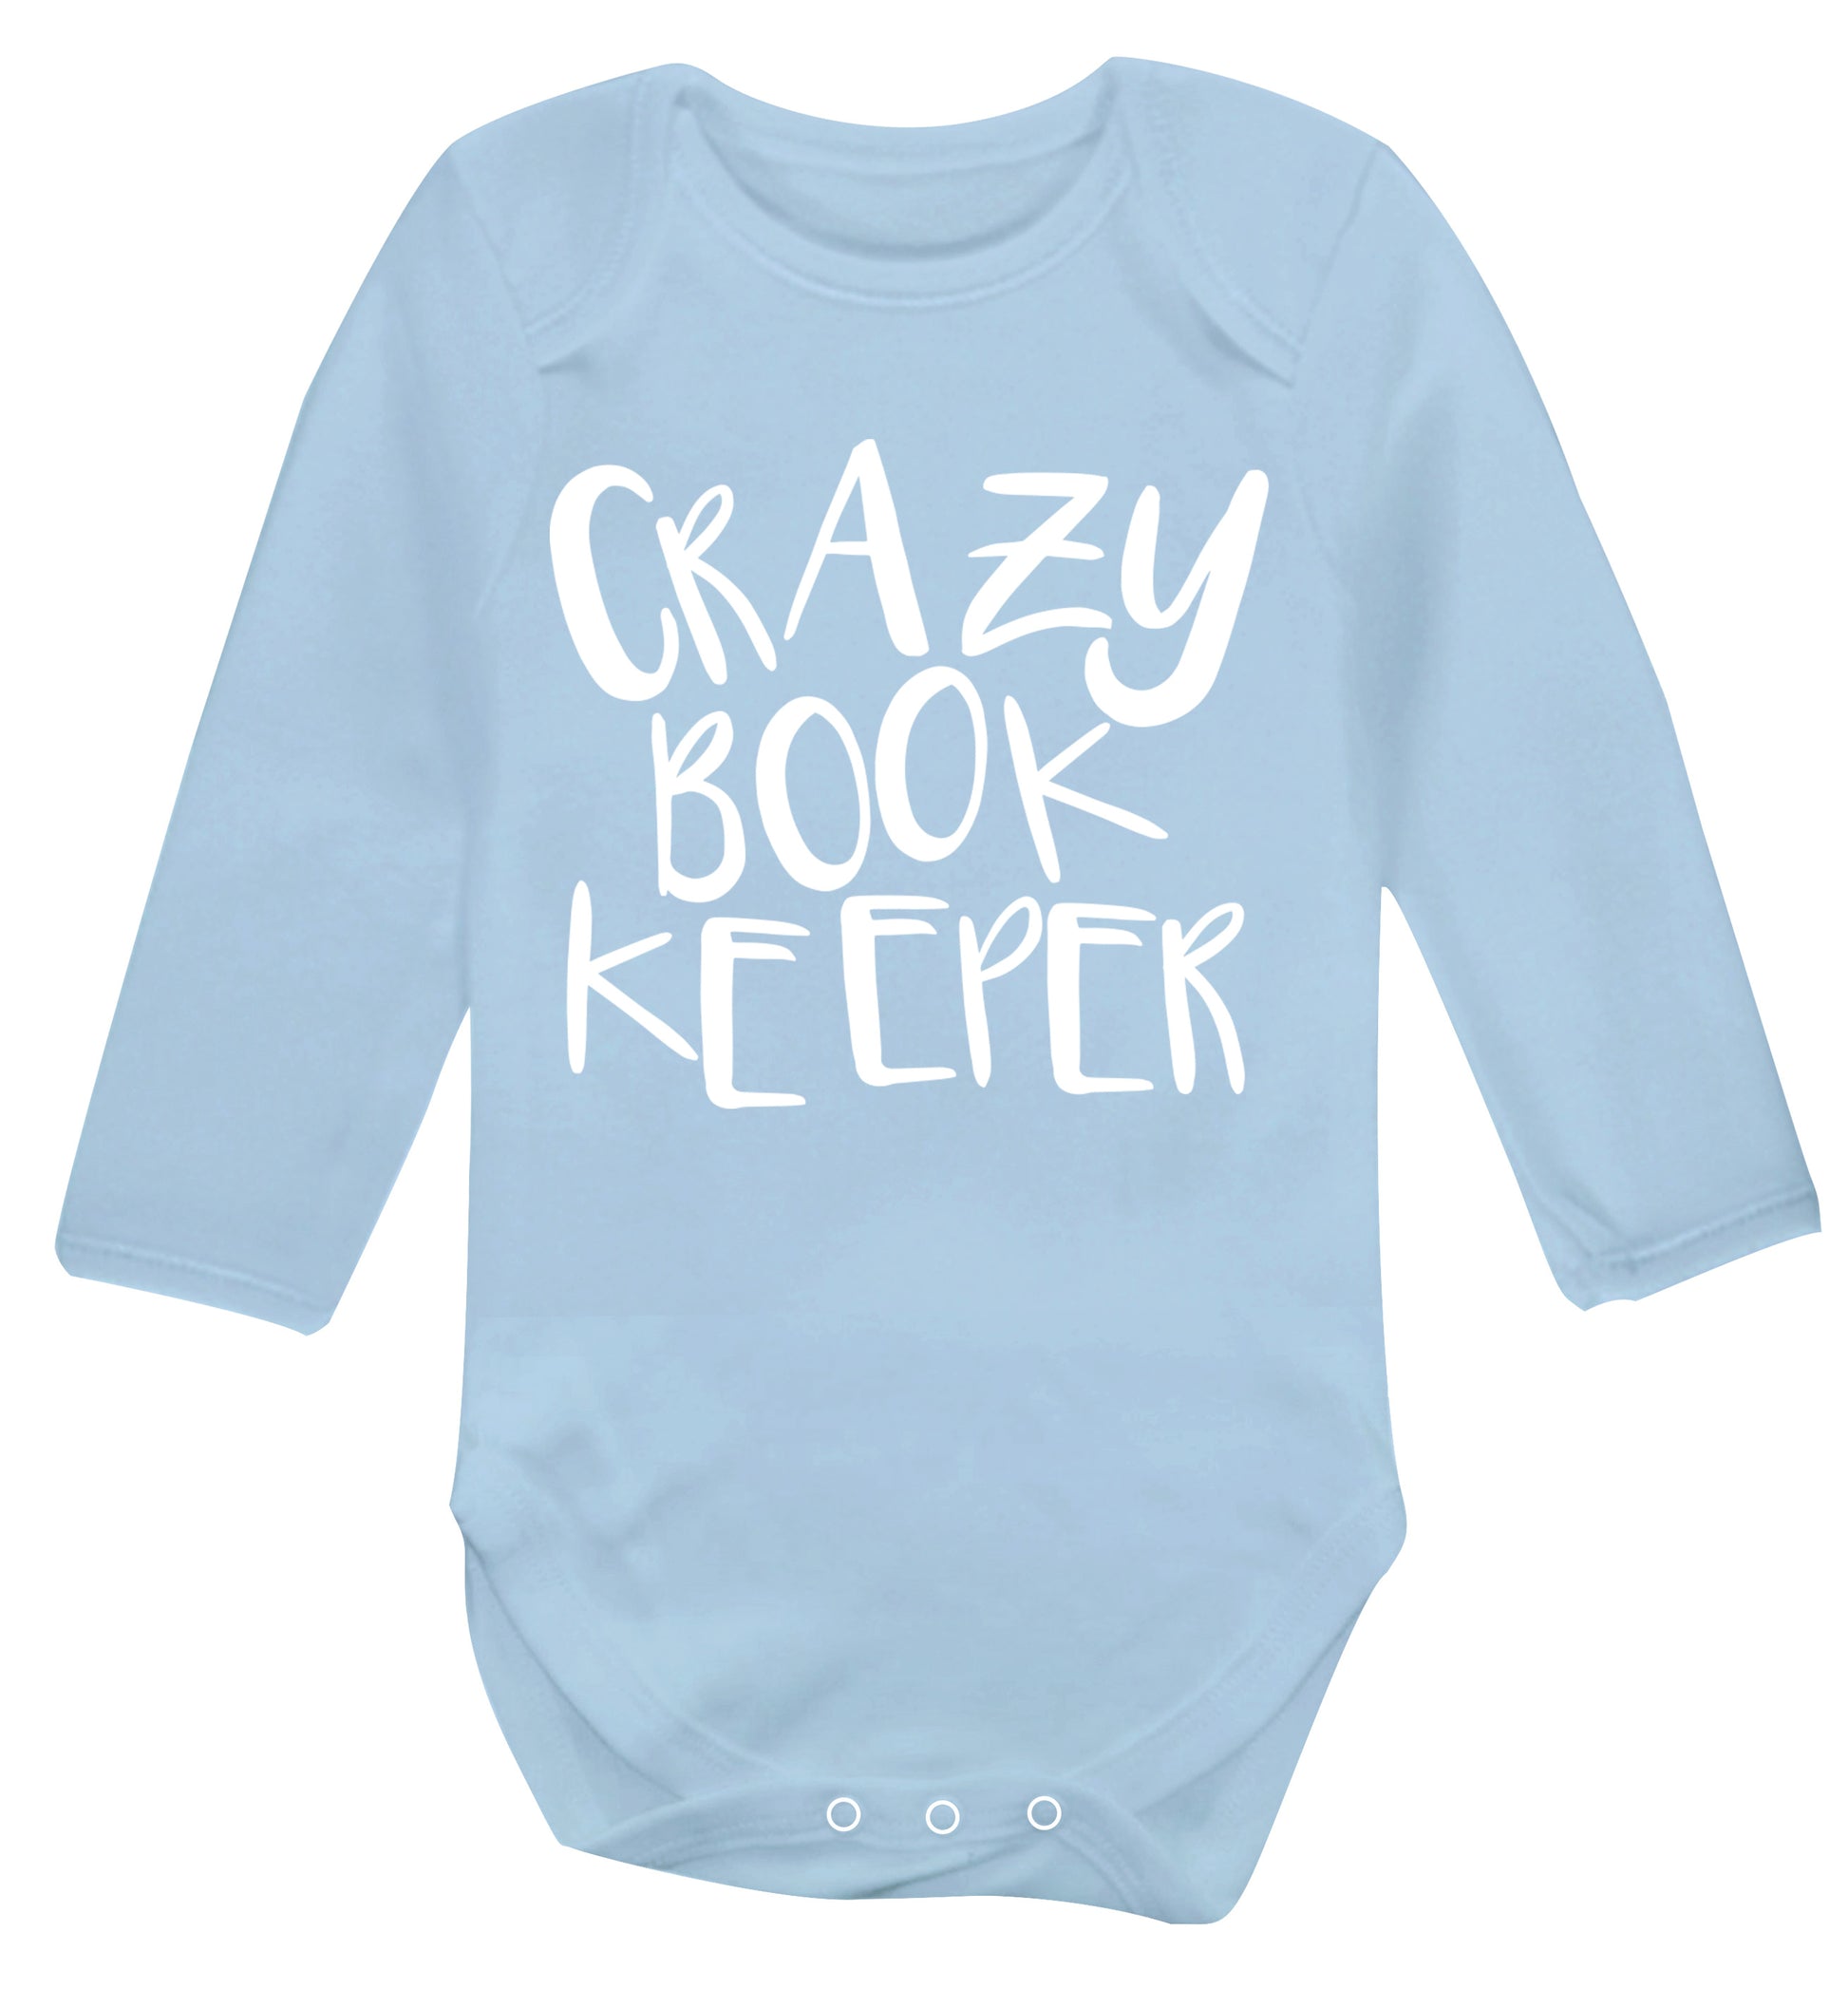 Crazy bookkeeper Baby Vest long sleeved pale blue 6-12 months